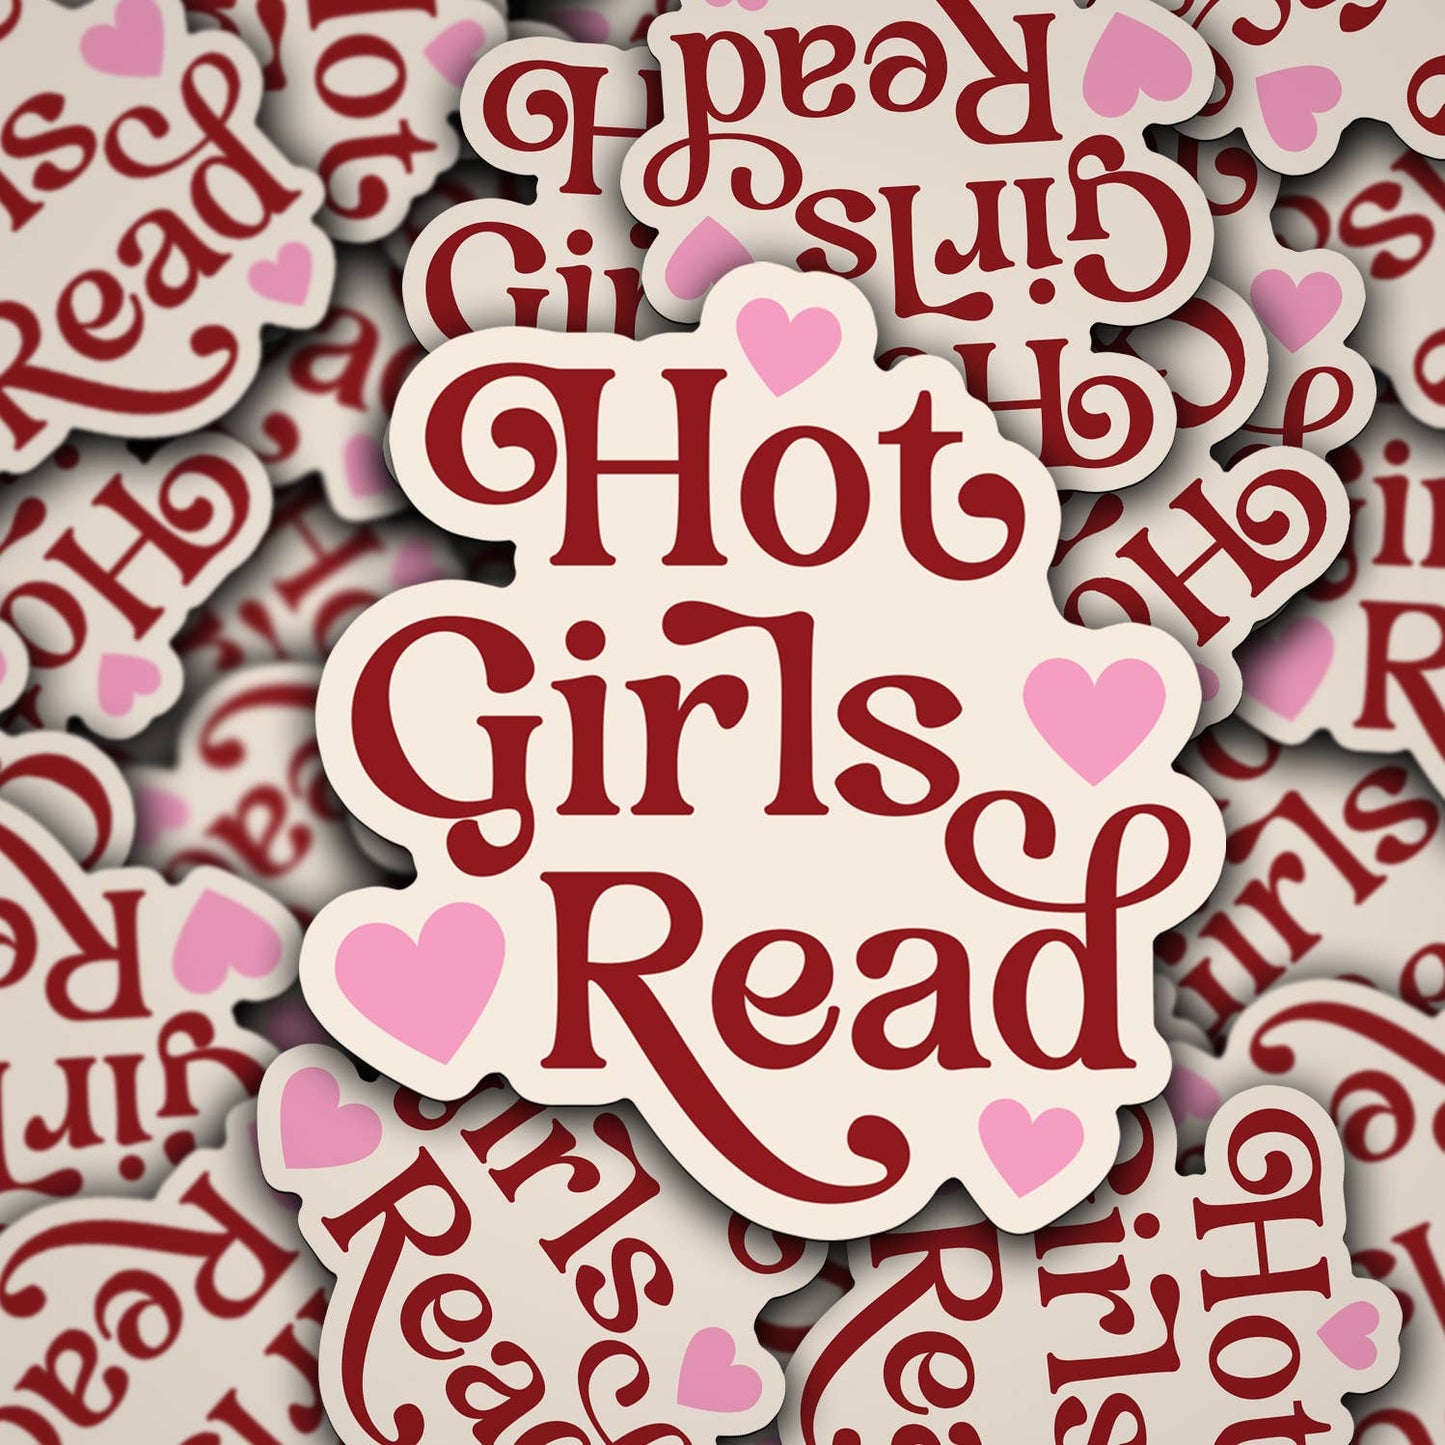 Hot Girls Read Sticker